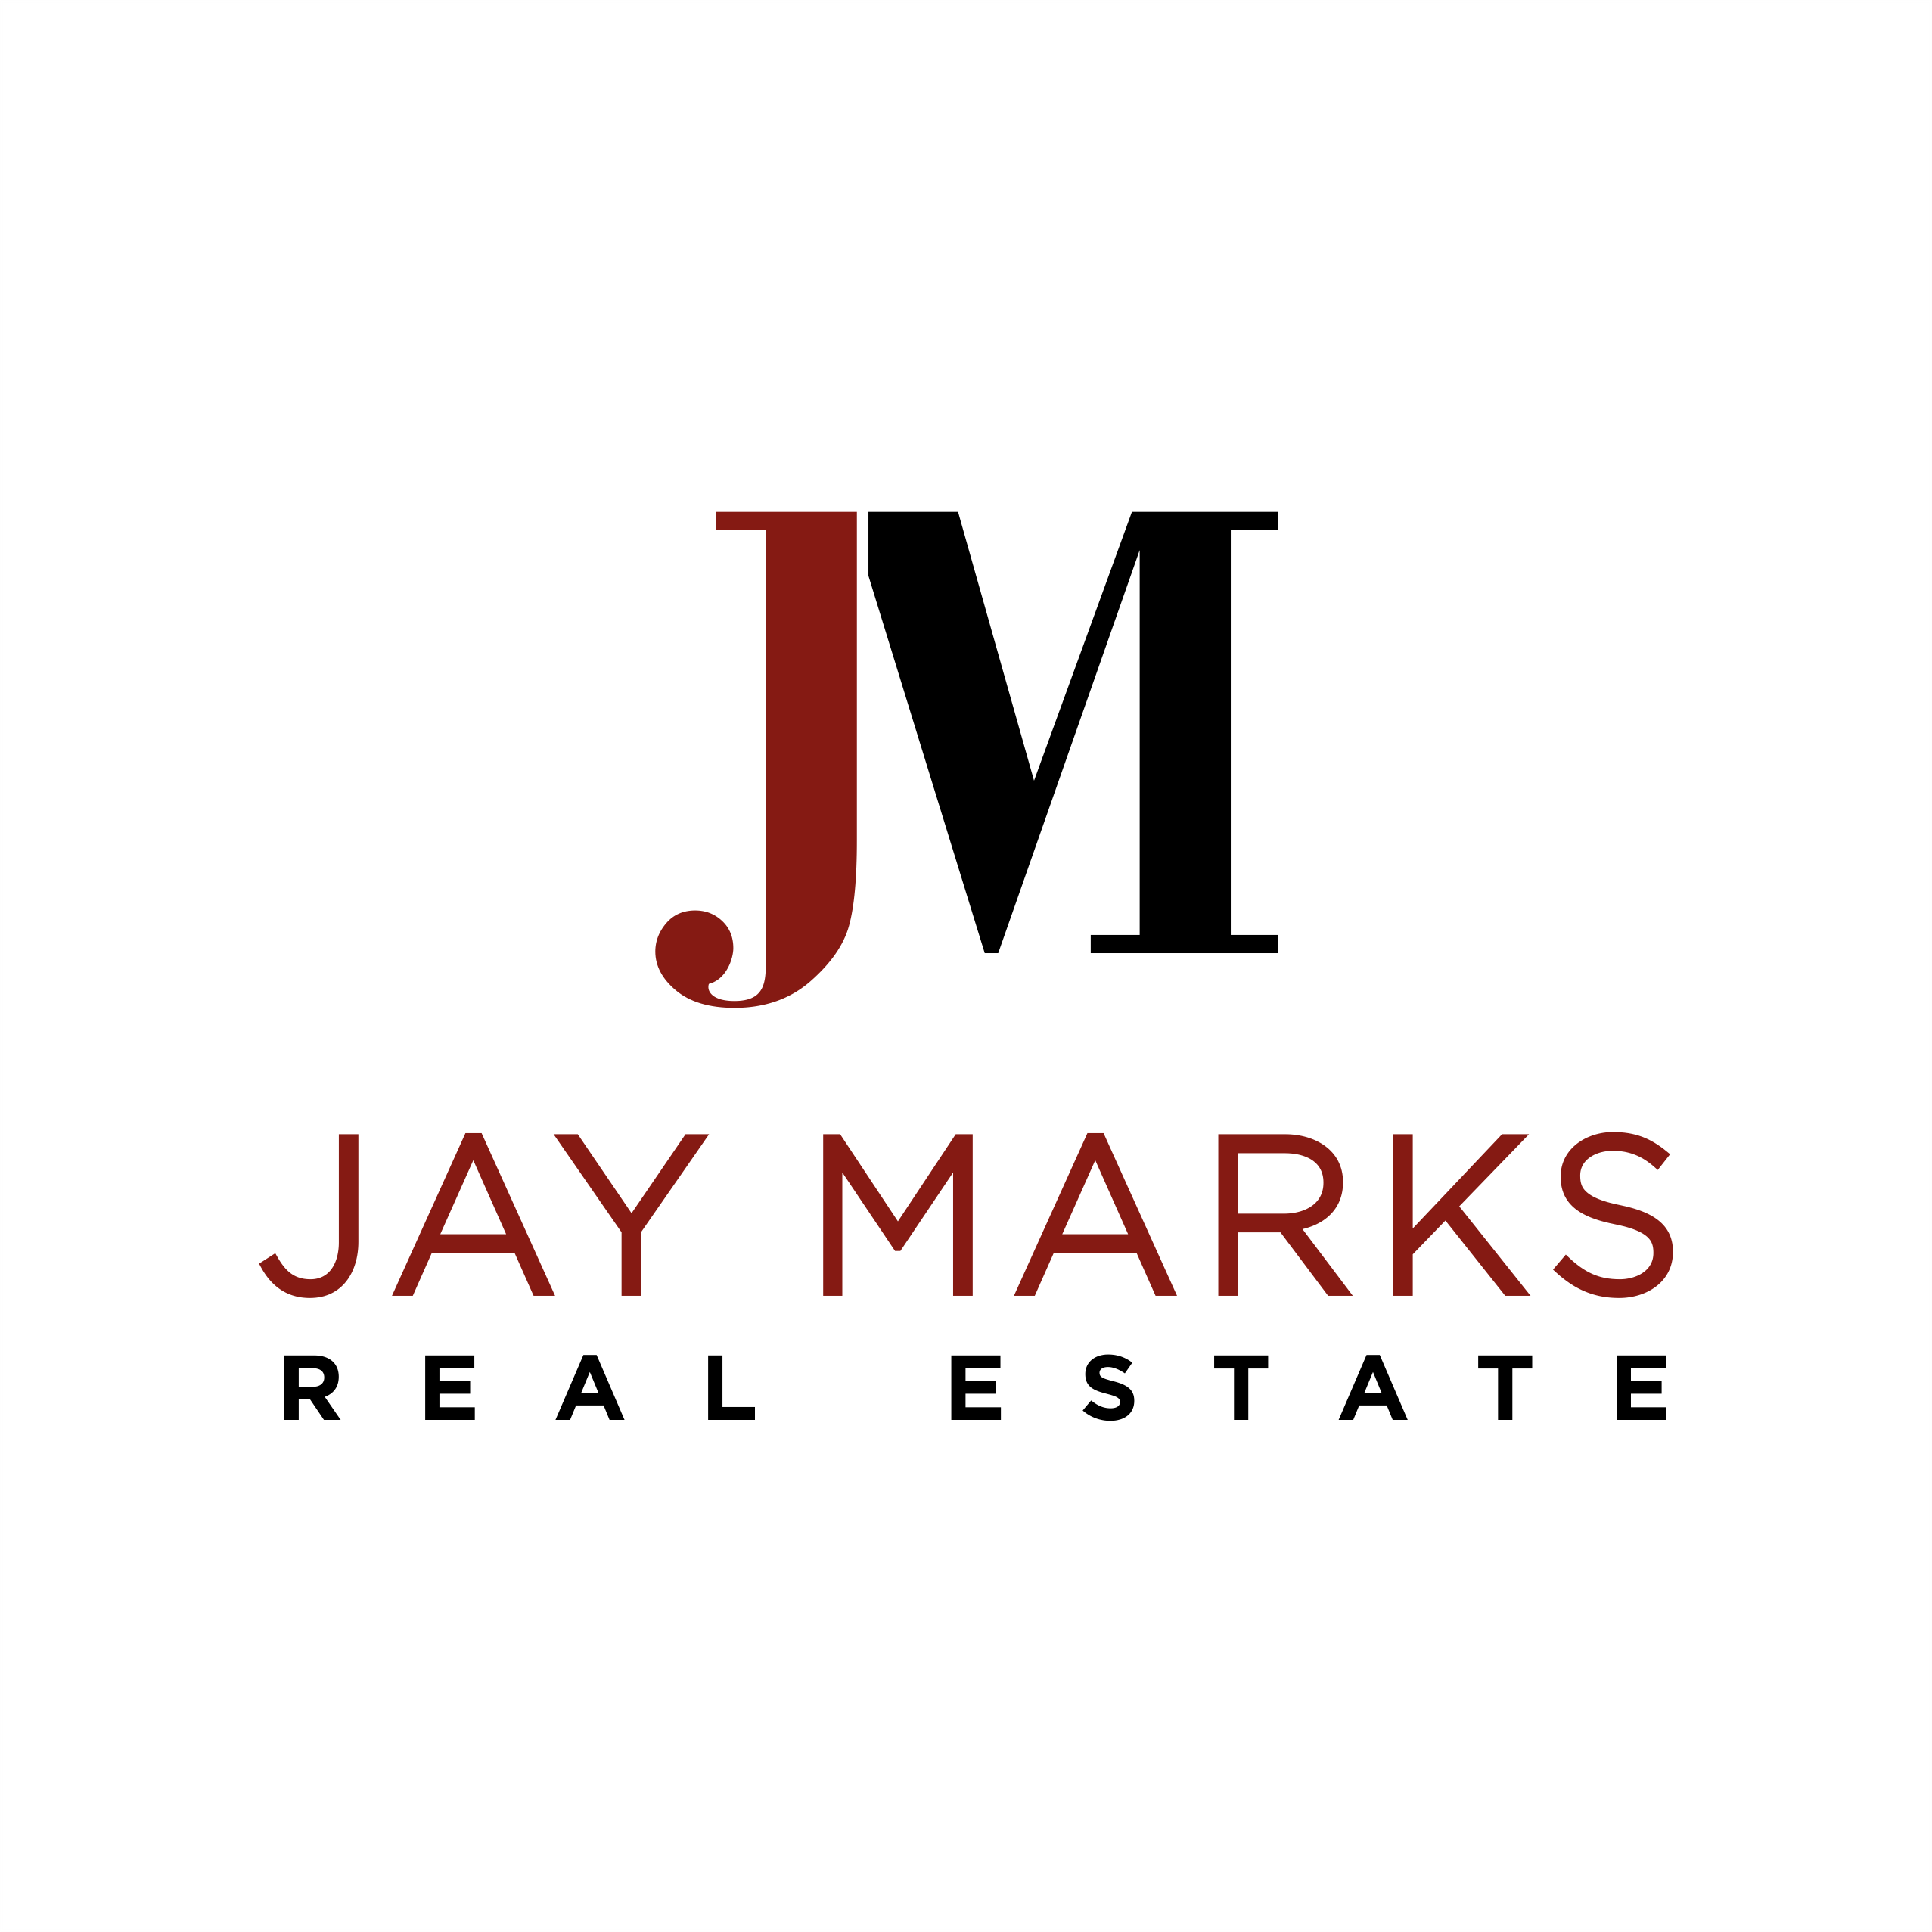 Jay Marks Real Estate